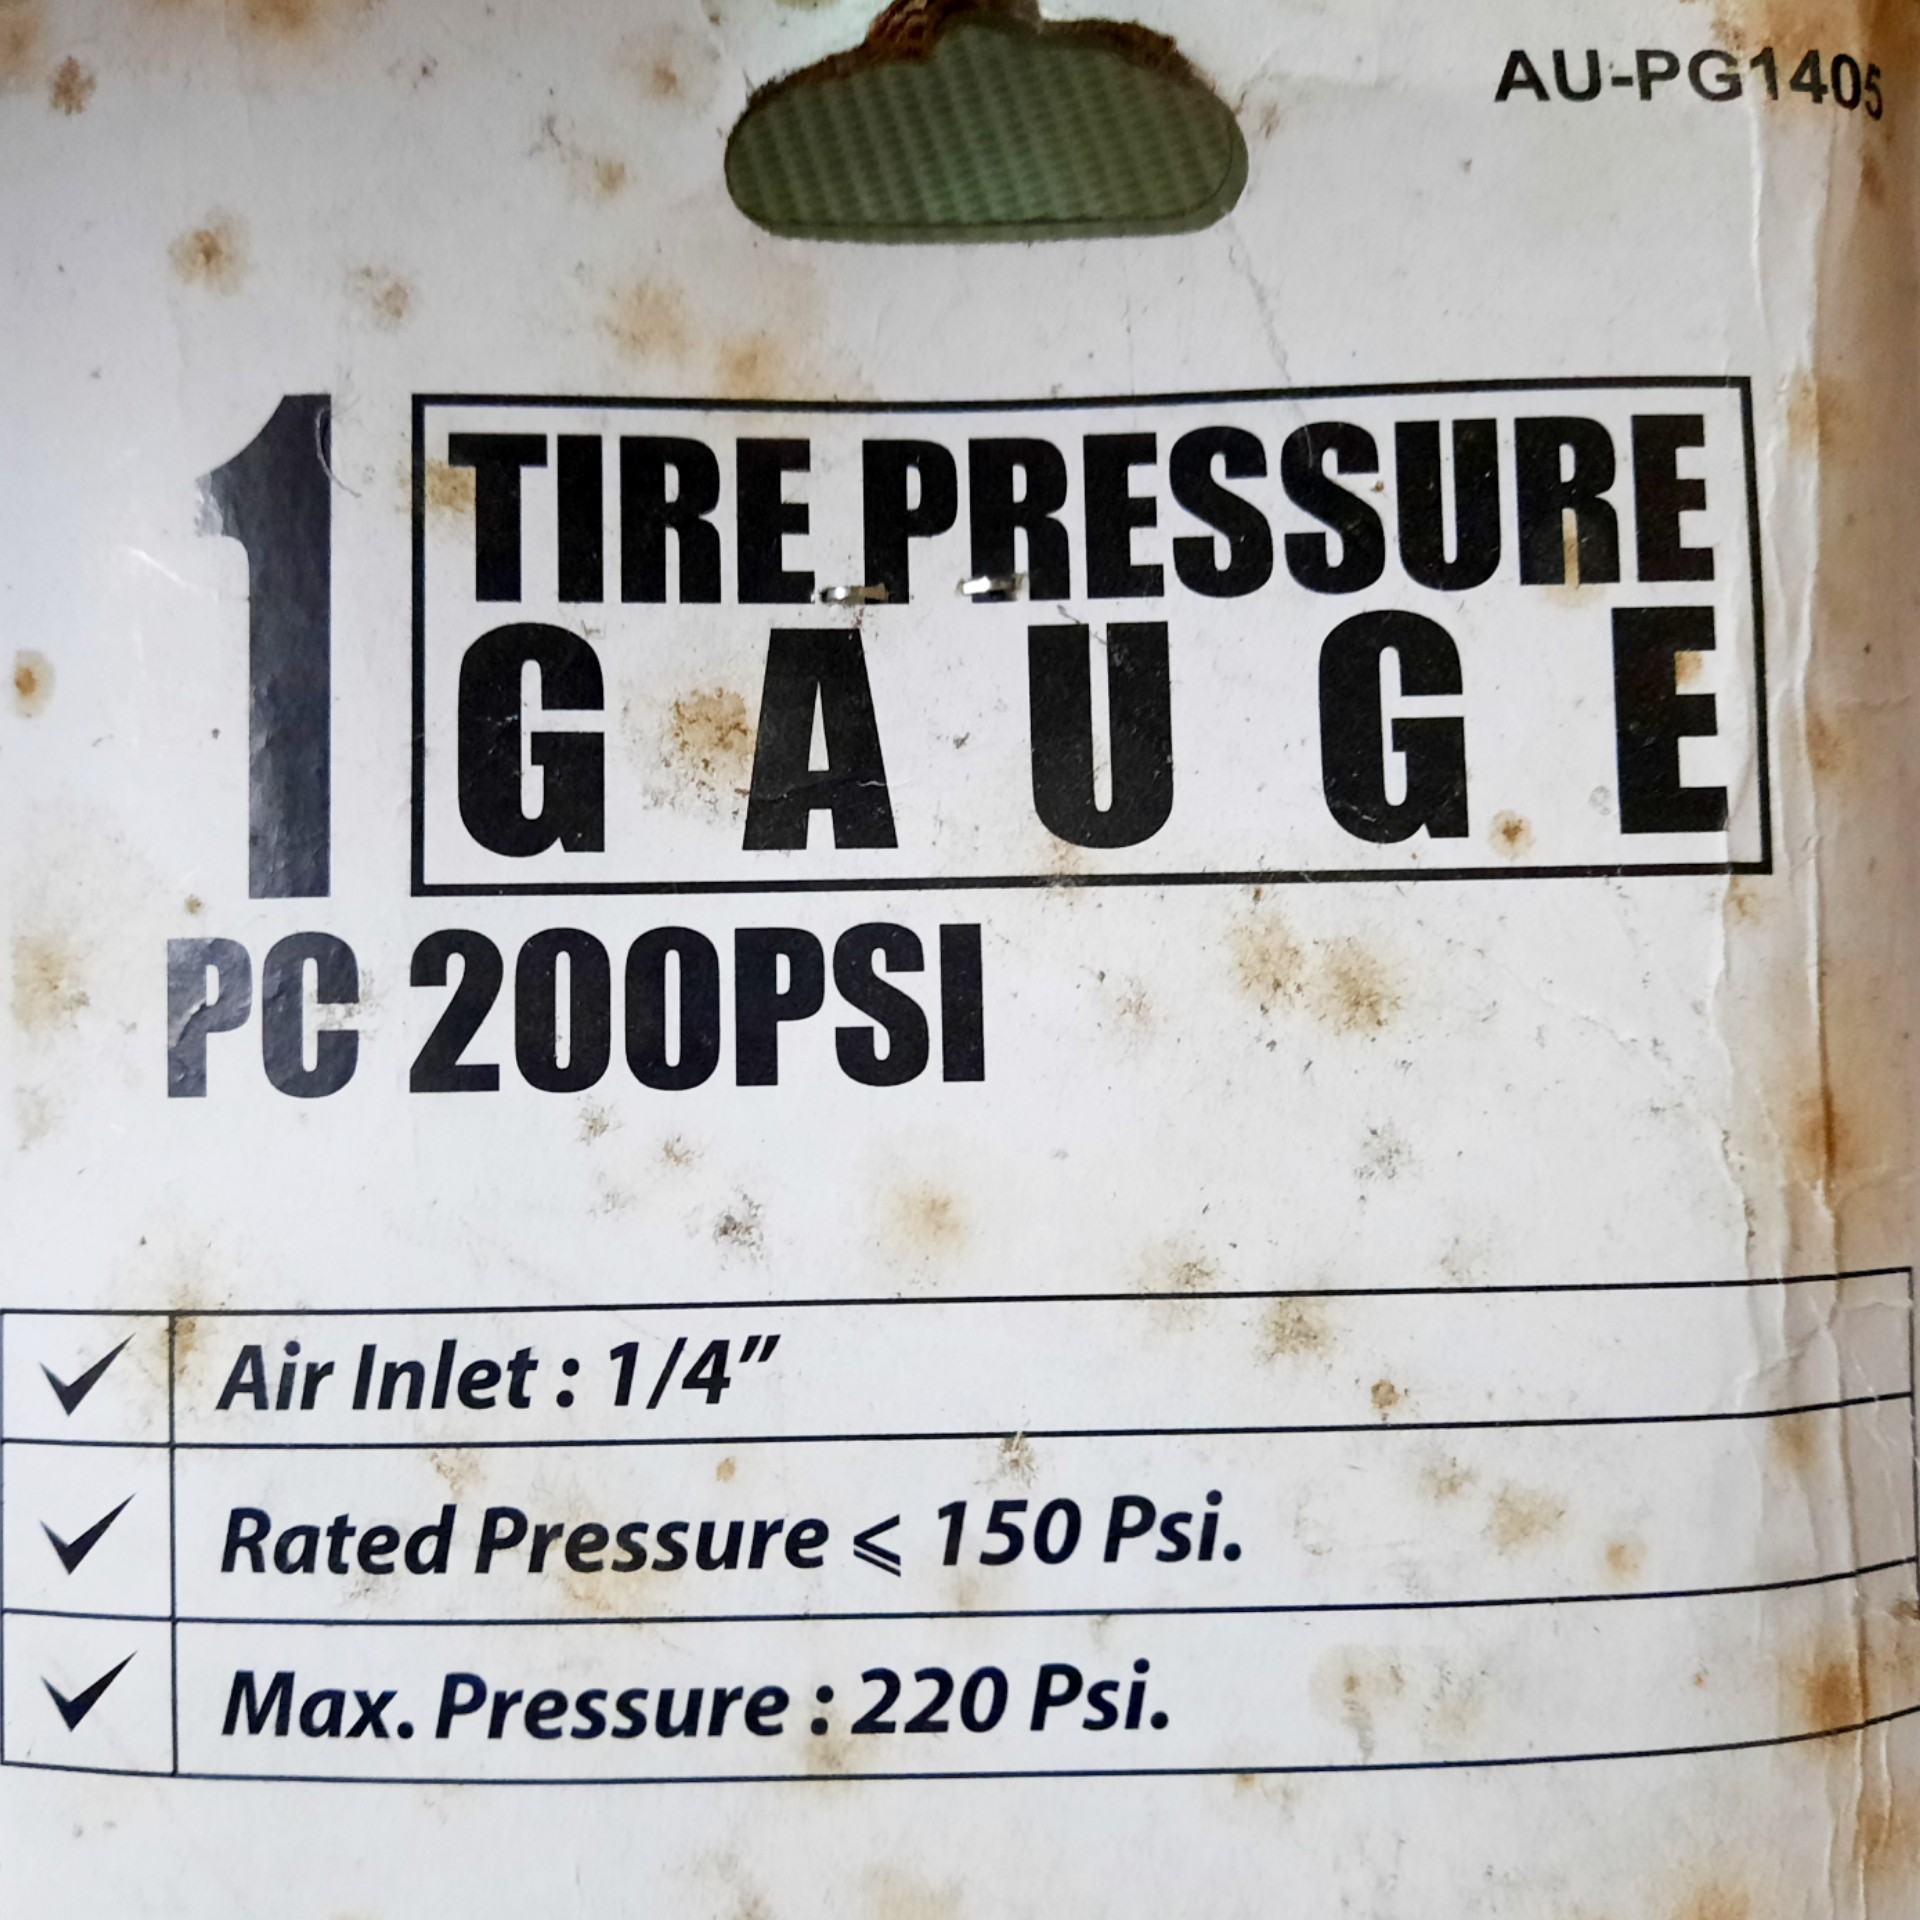 Tire Pressure Gauge Tekiro AU-PG1405 5